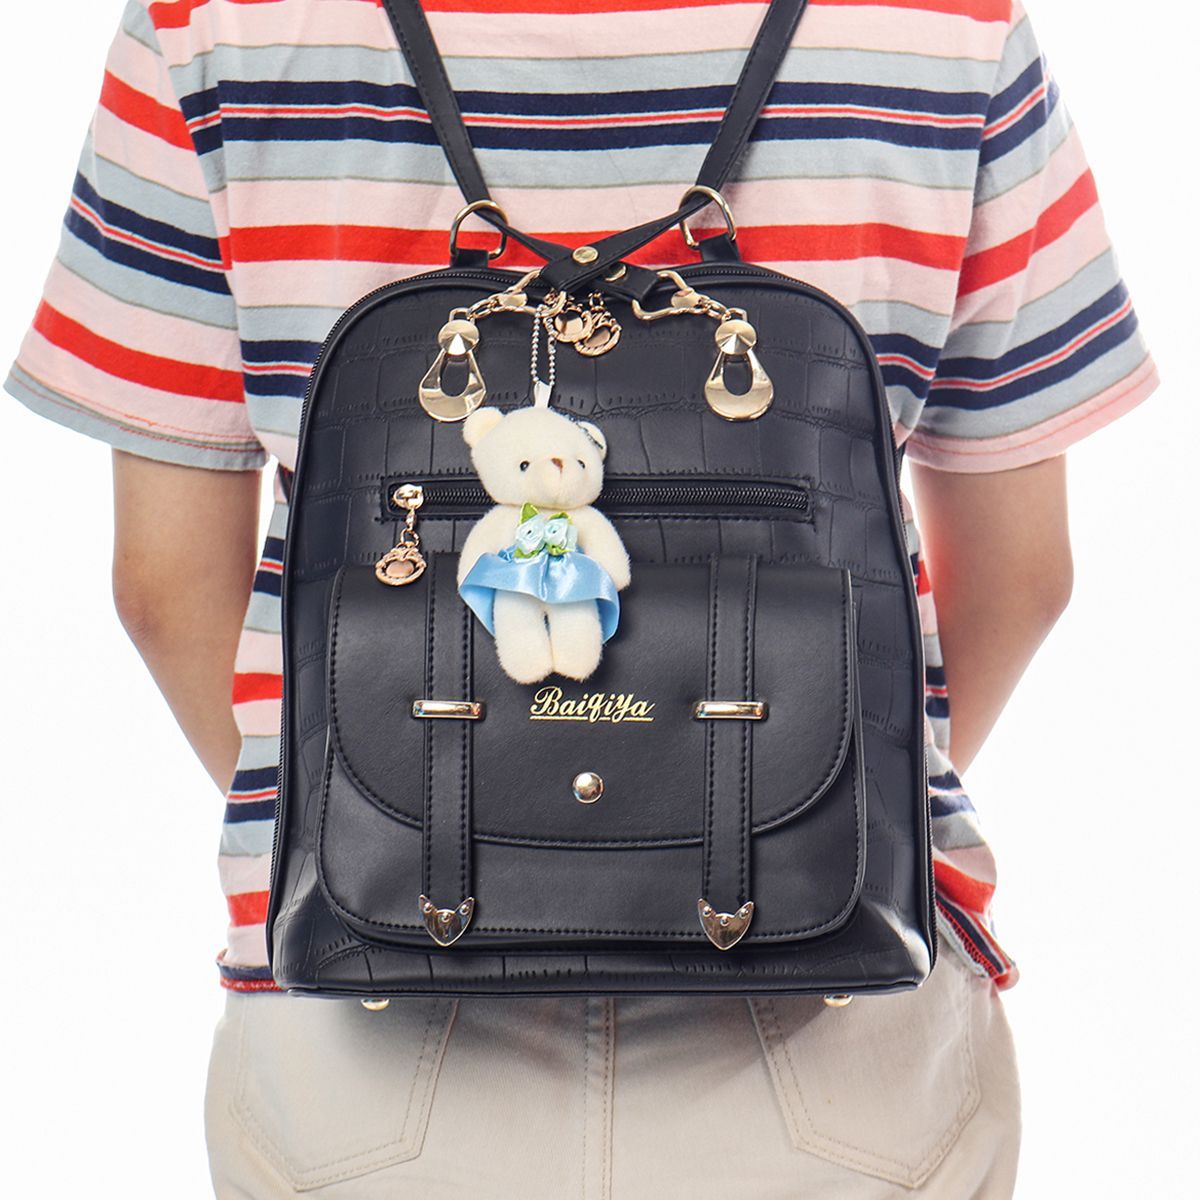 PU-Leather-Backpack-Double-Shoulder-Bag-Women-Schoolbag-Handbag-Crocodile-Pattern-with-Bear-Pendant--1756505